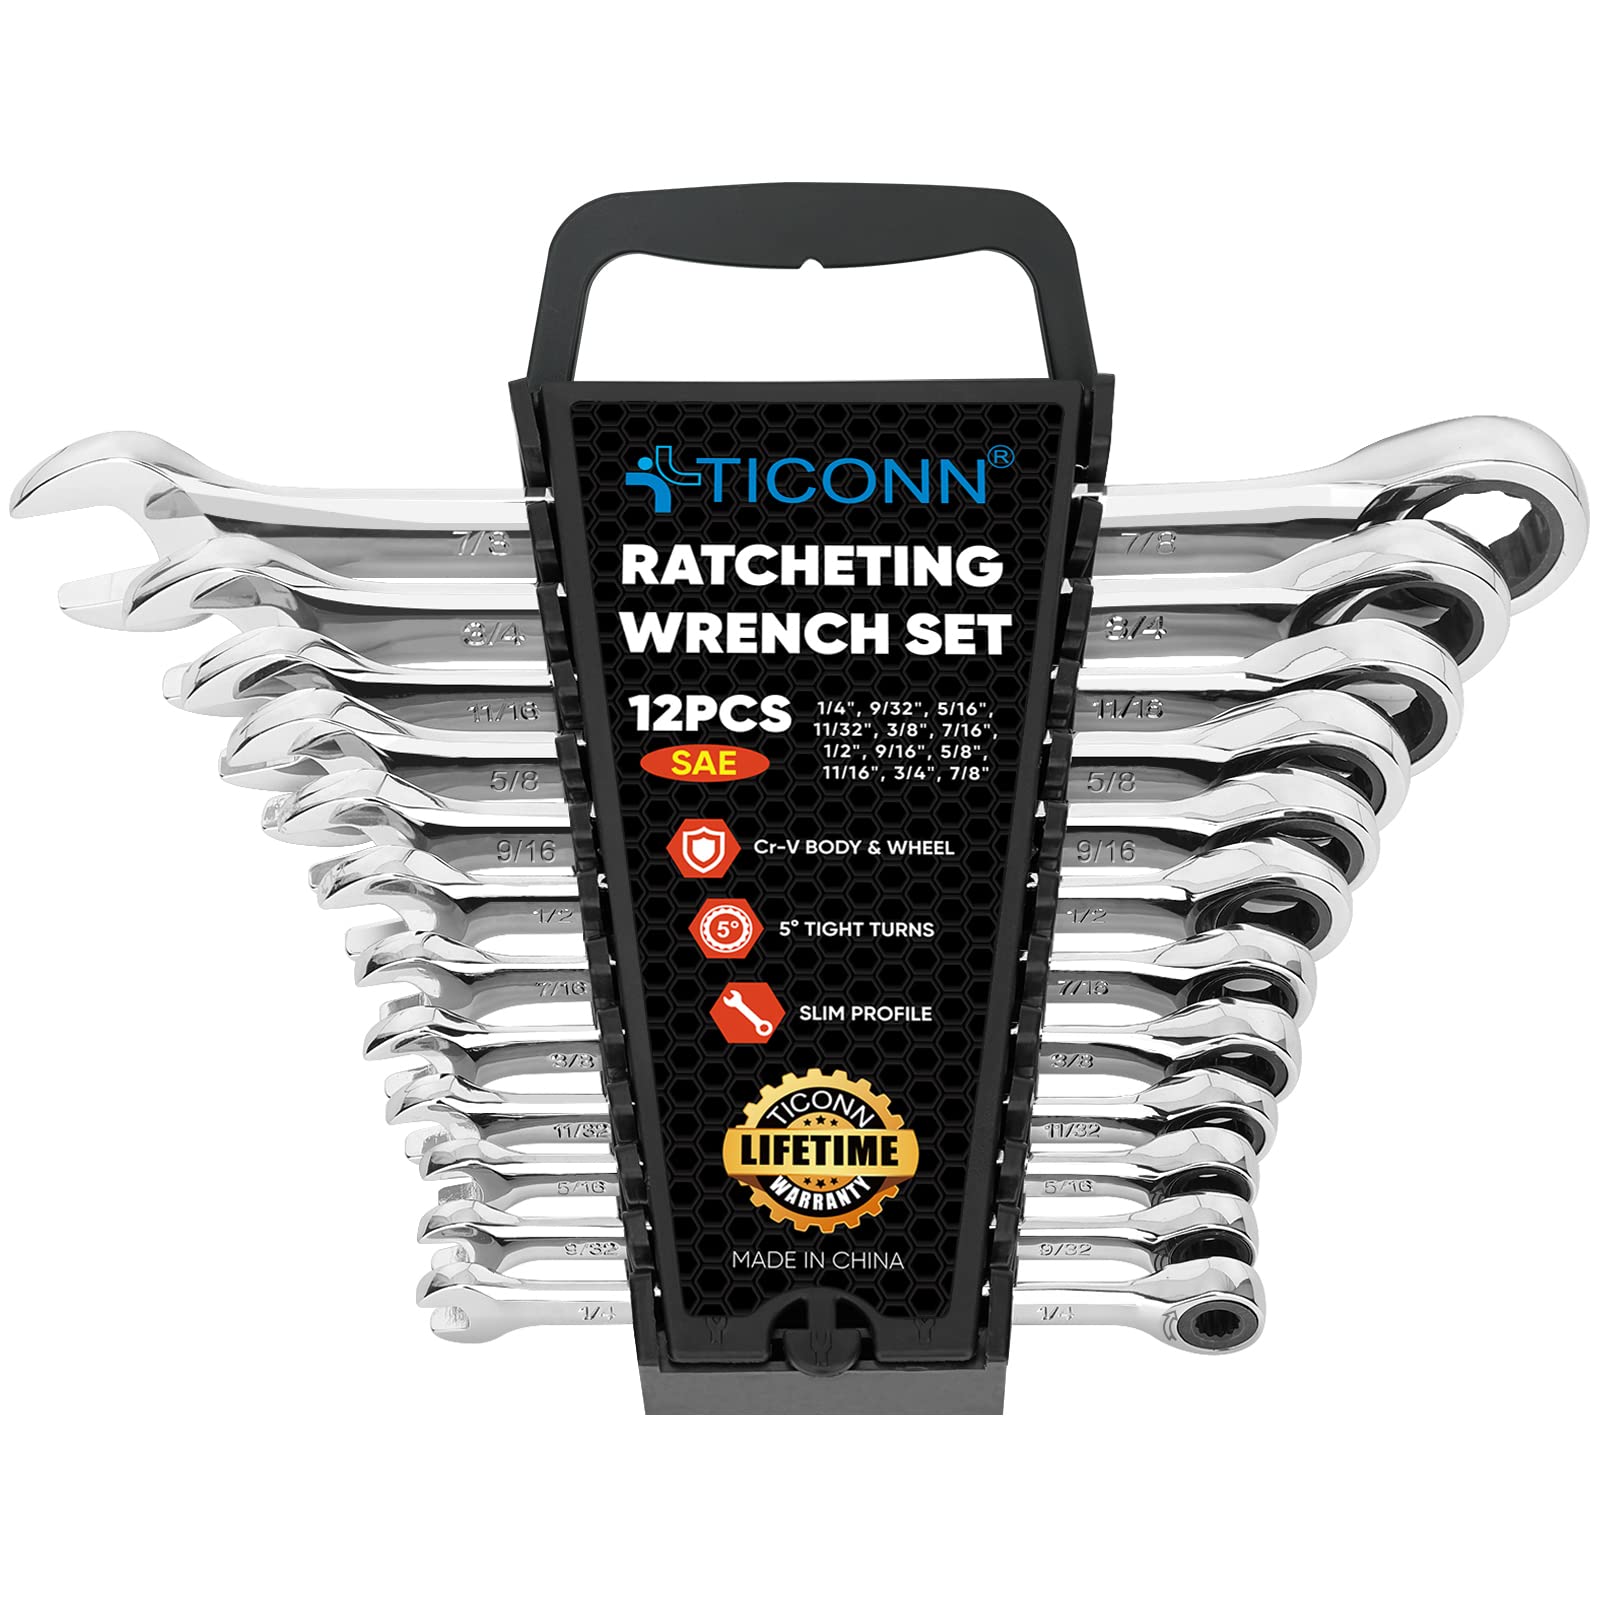 TICONN 12PCS Ratcheting Wrench Set Professional Slim Profile Mechanic Cr-V Ratchet Wrench Set with Organizer Rack 12PCS Inc